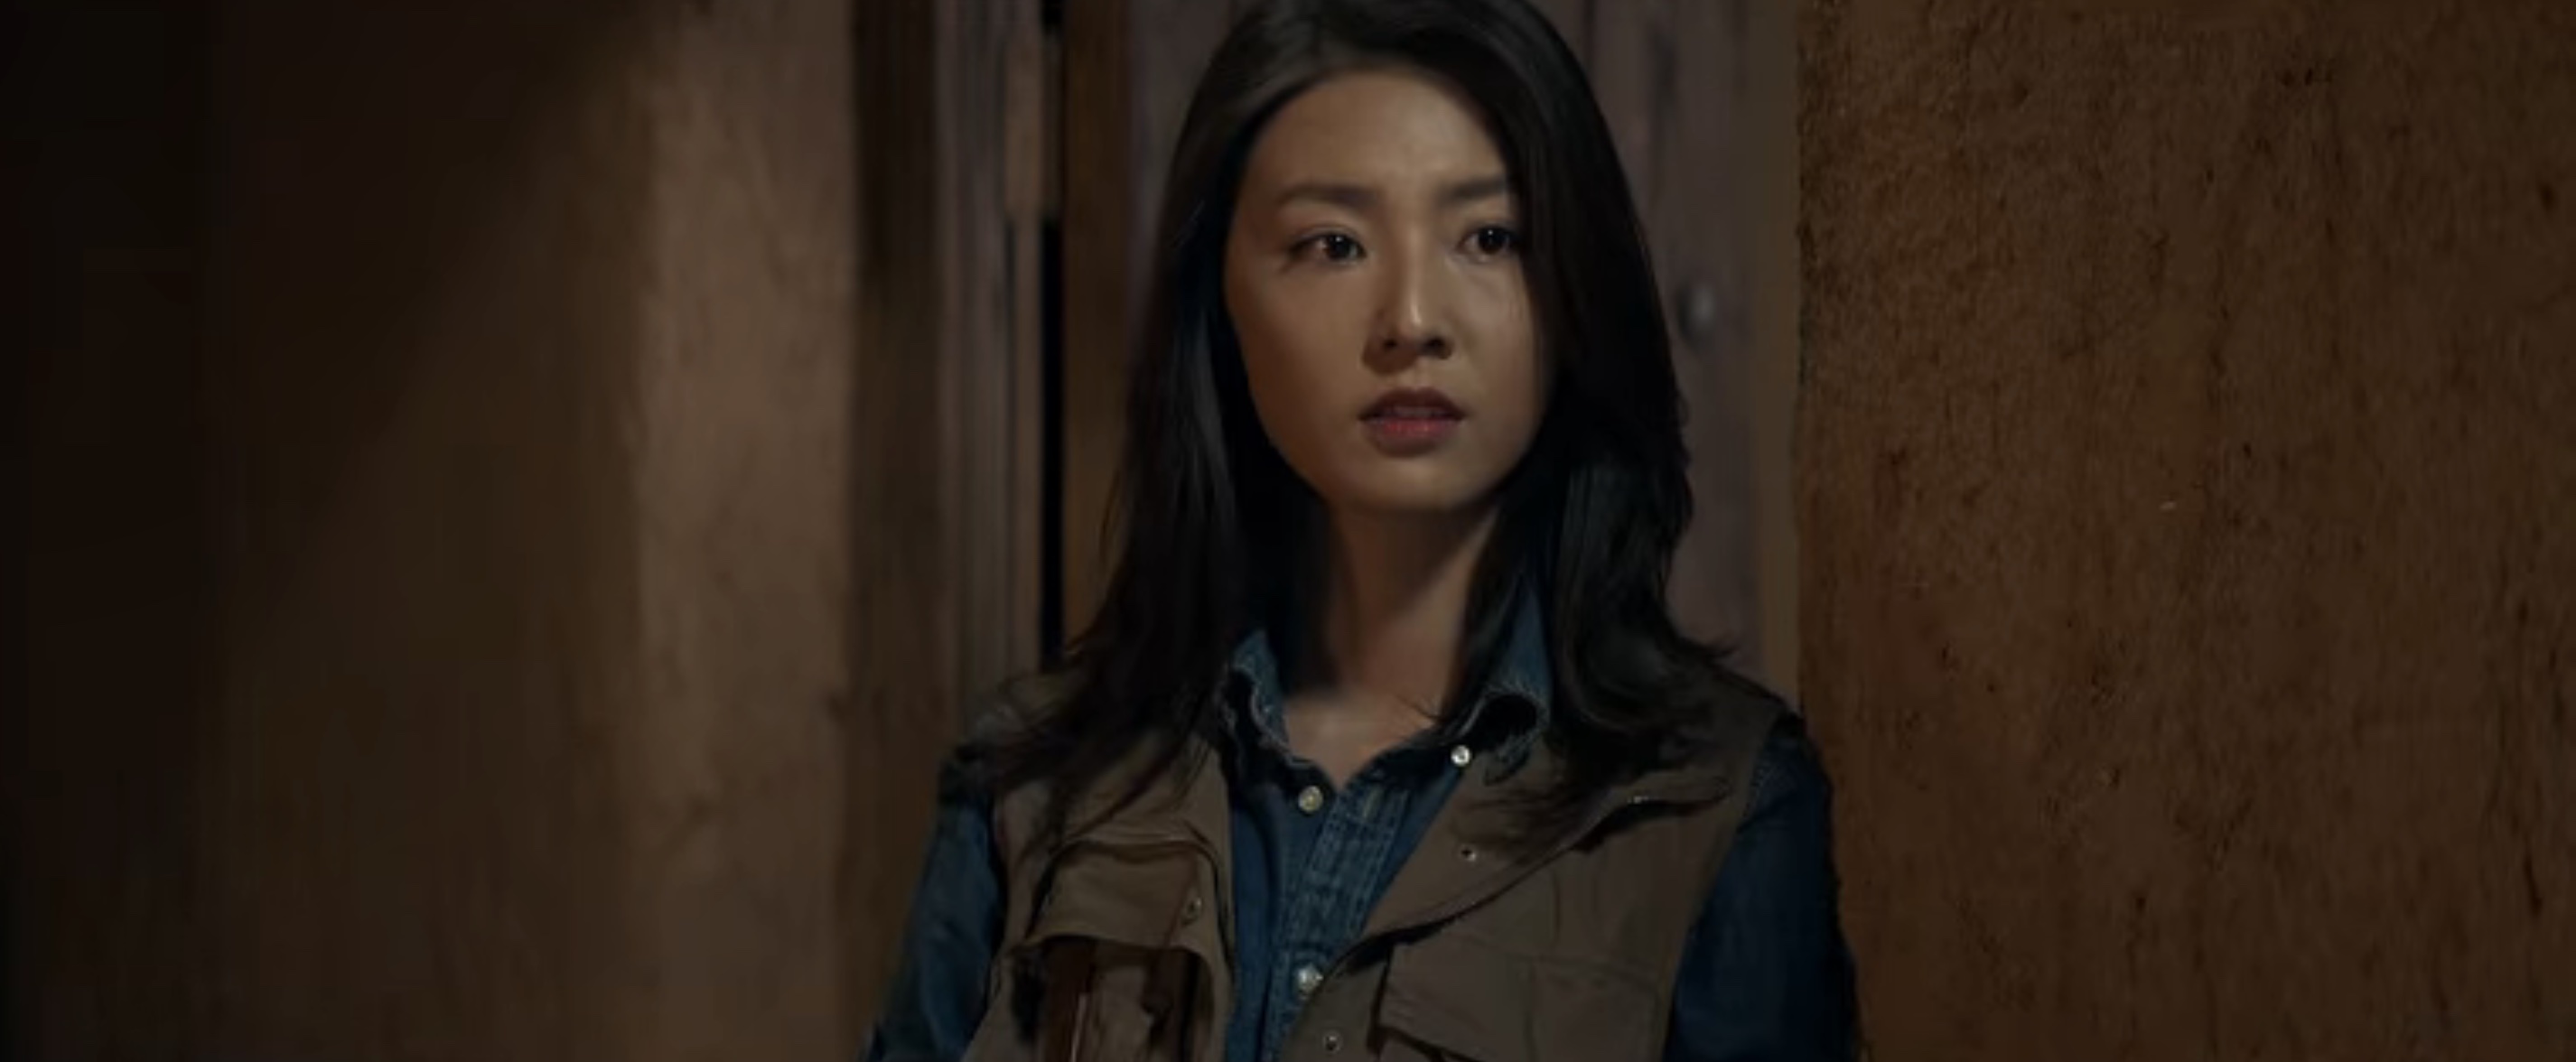 Hidden Strike Cast on Netflix - Ma Chunrui as Mei